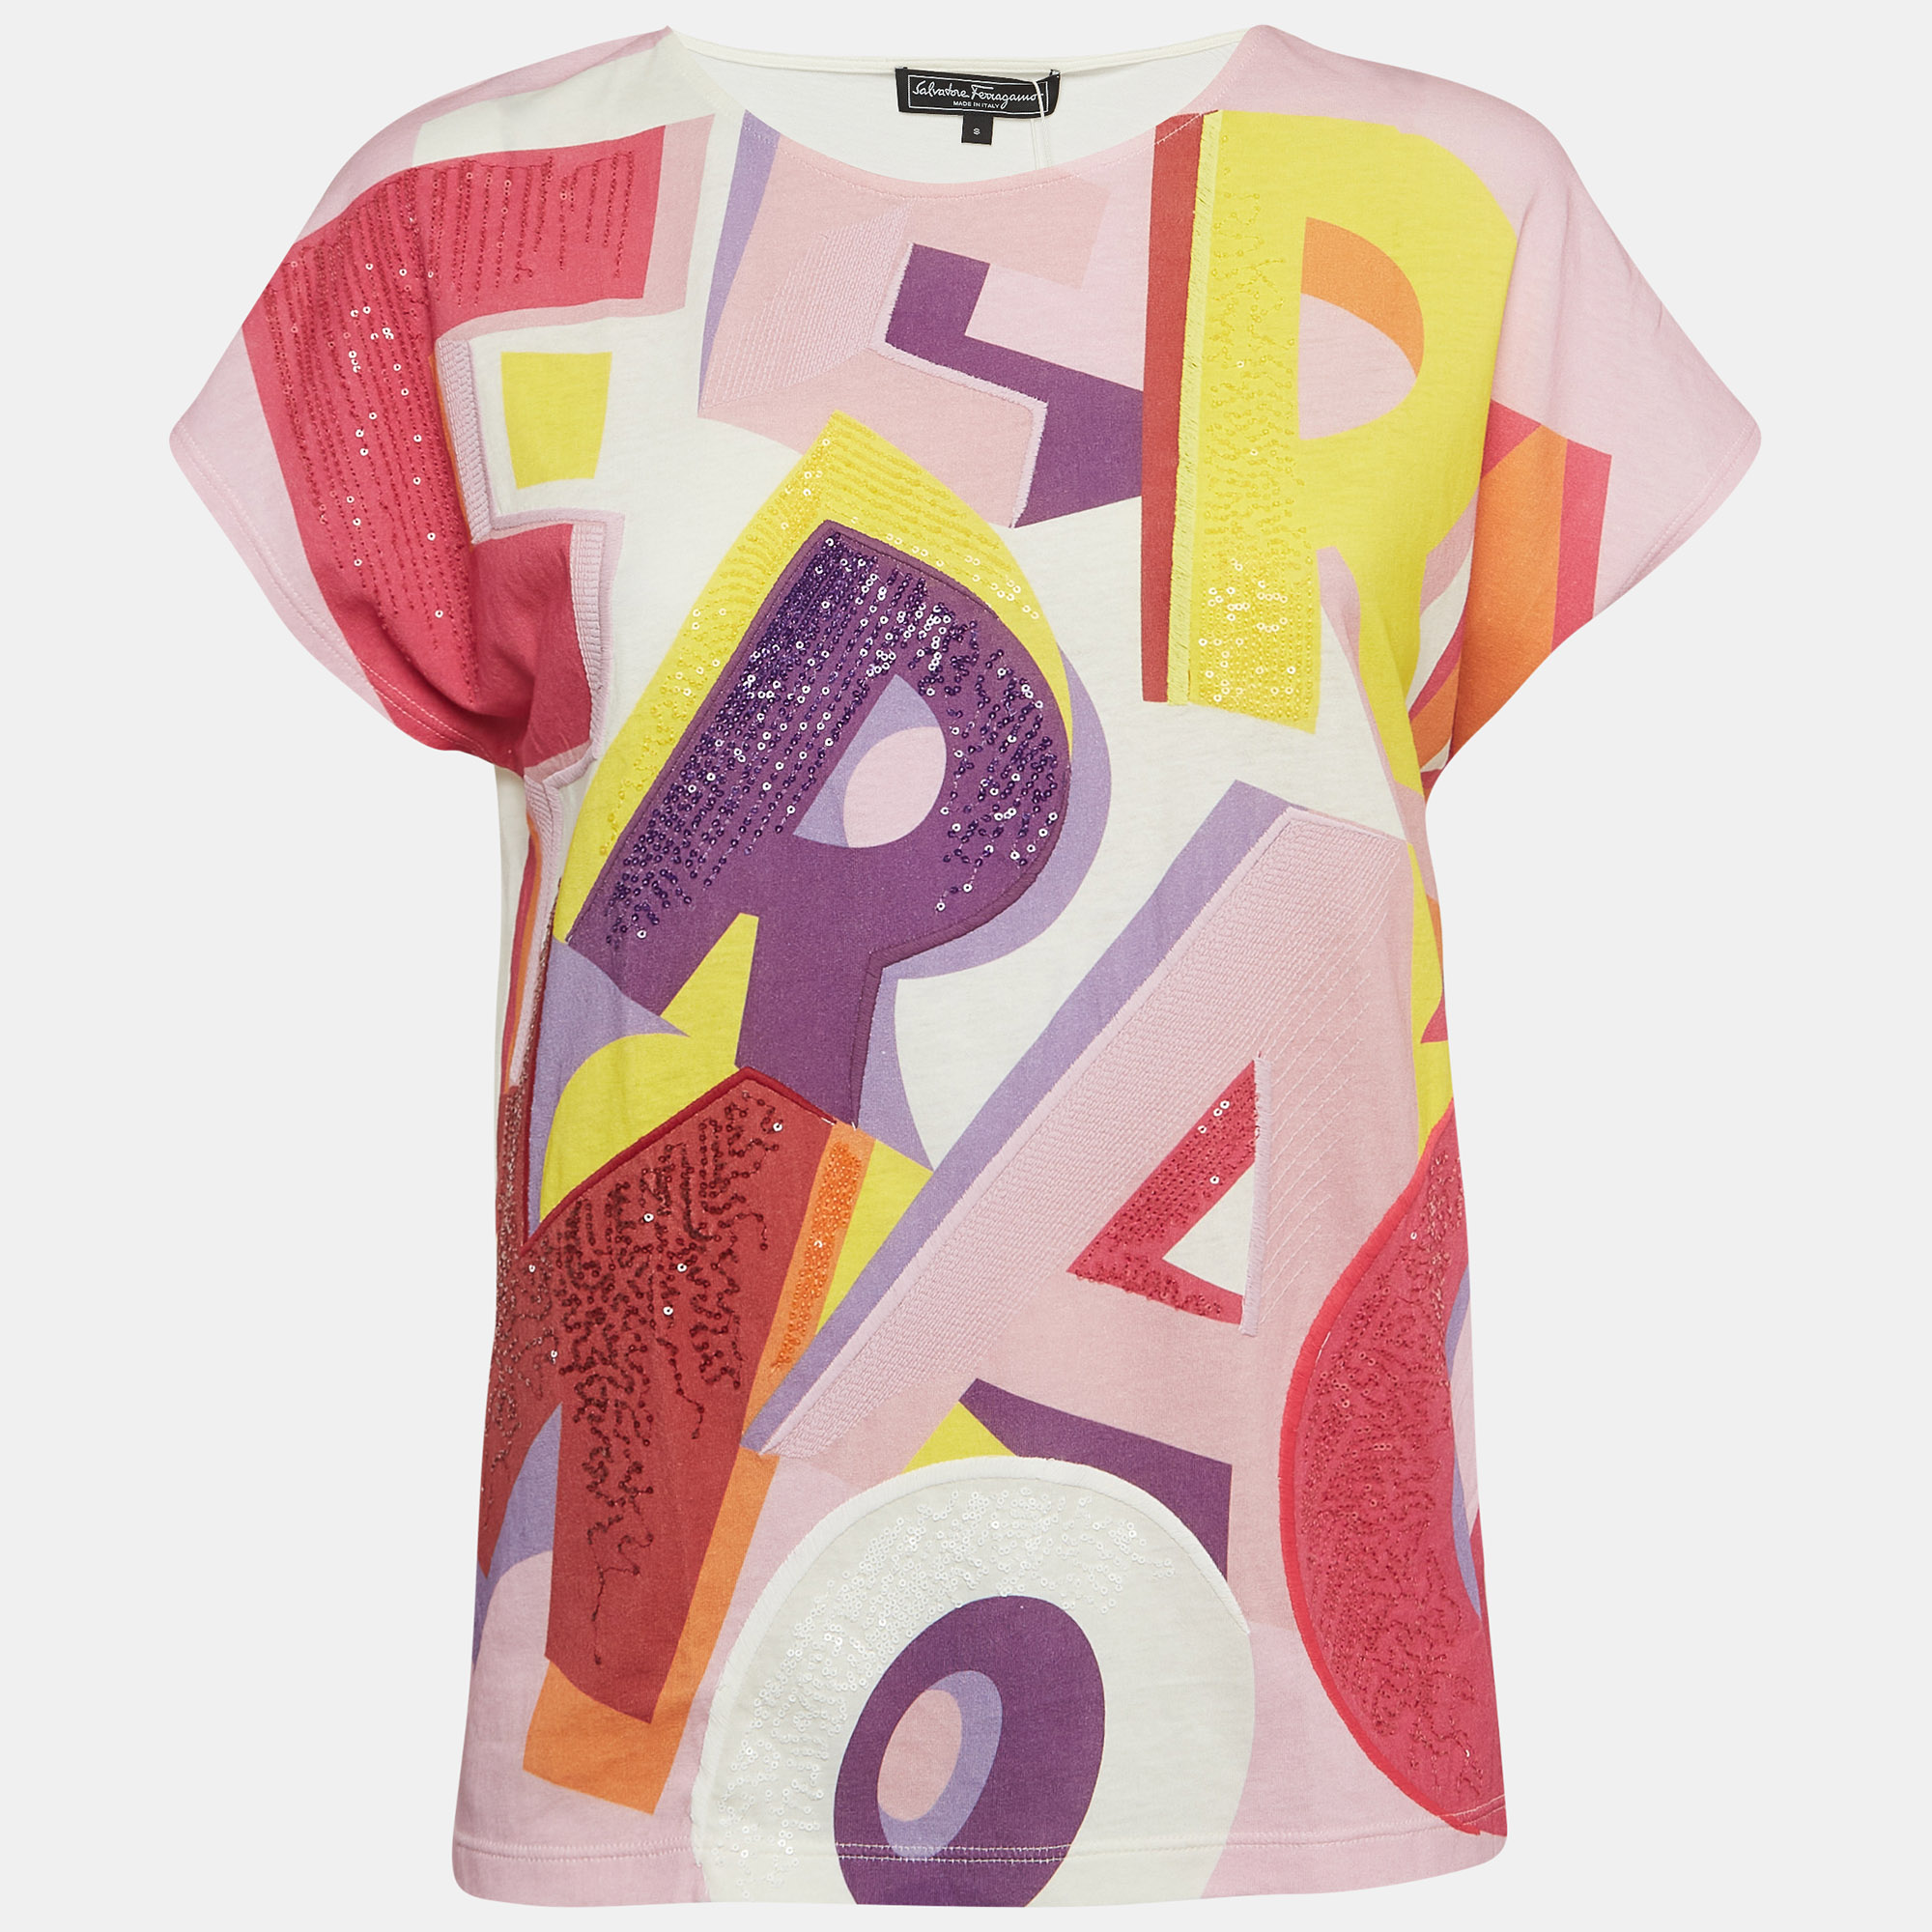 Salvatore ferragamo multicolor printed cotton sequin detail t-shirt s